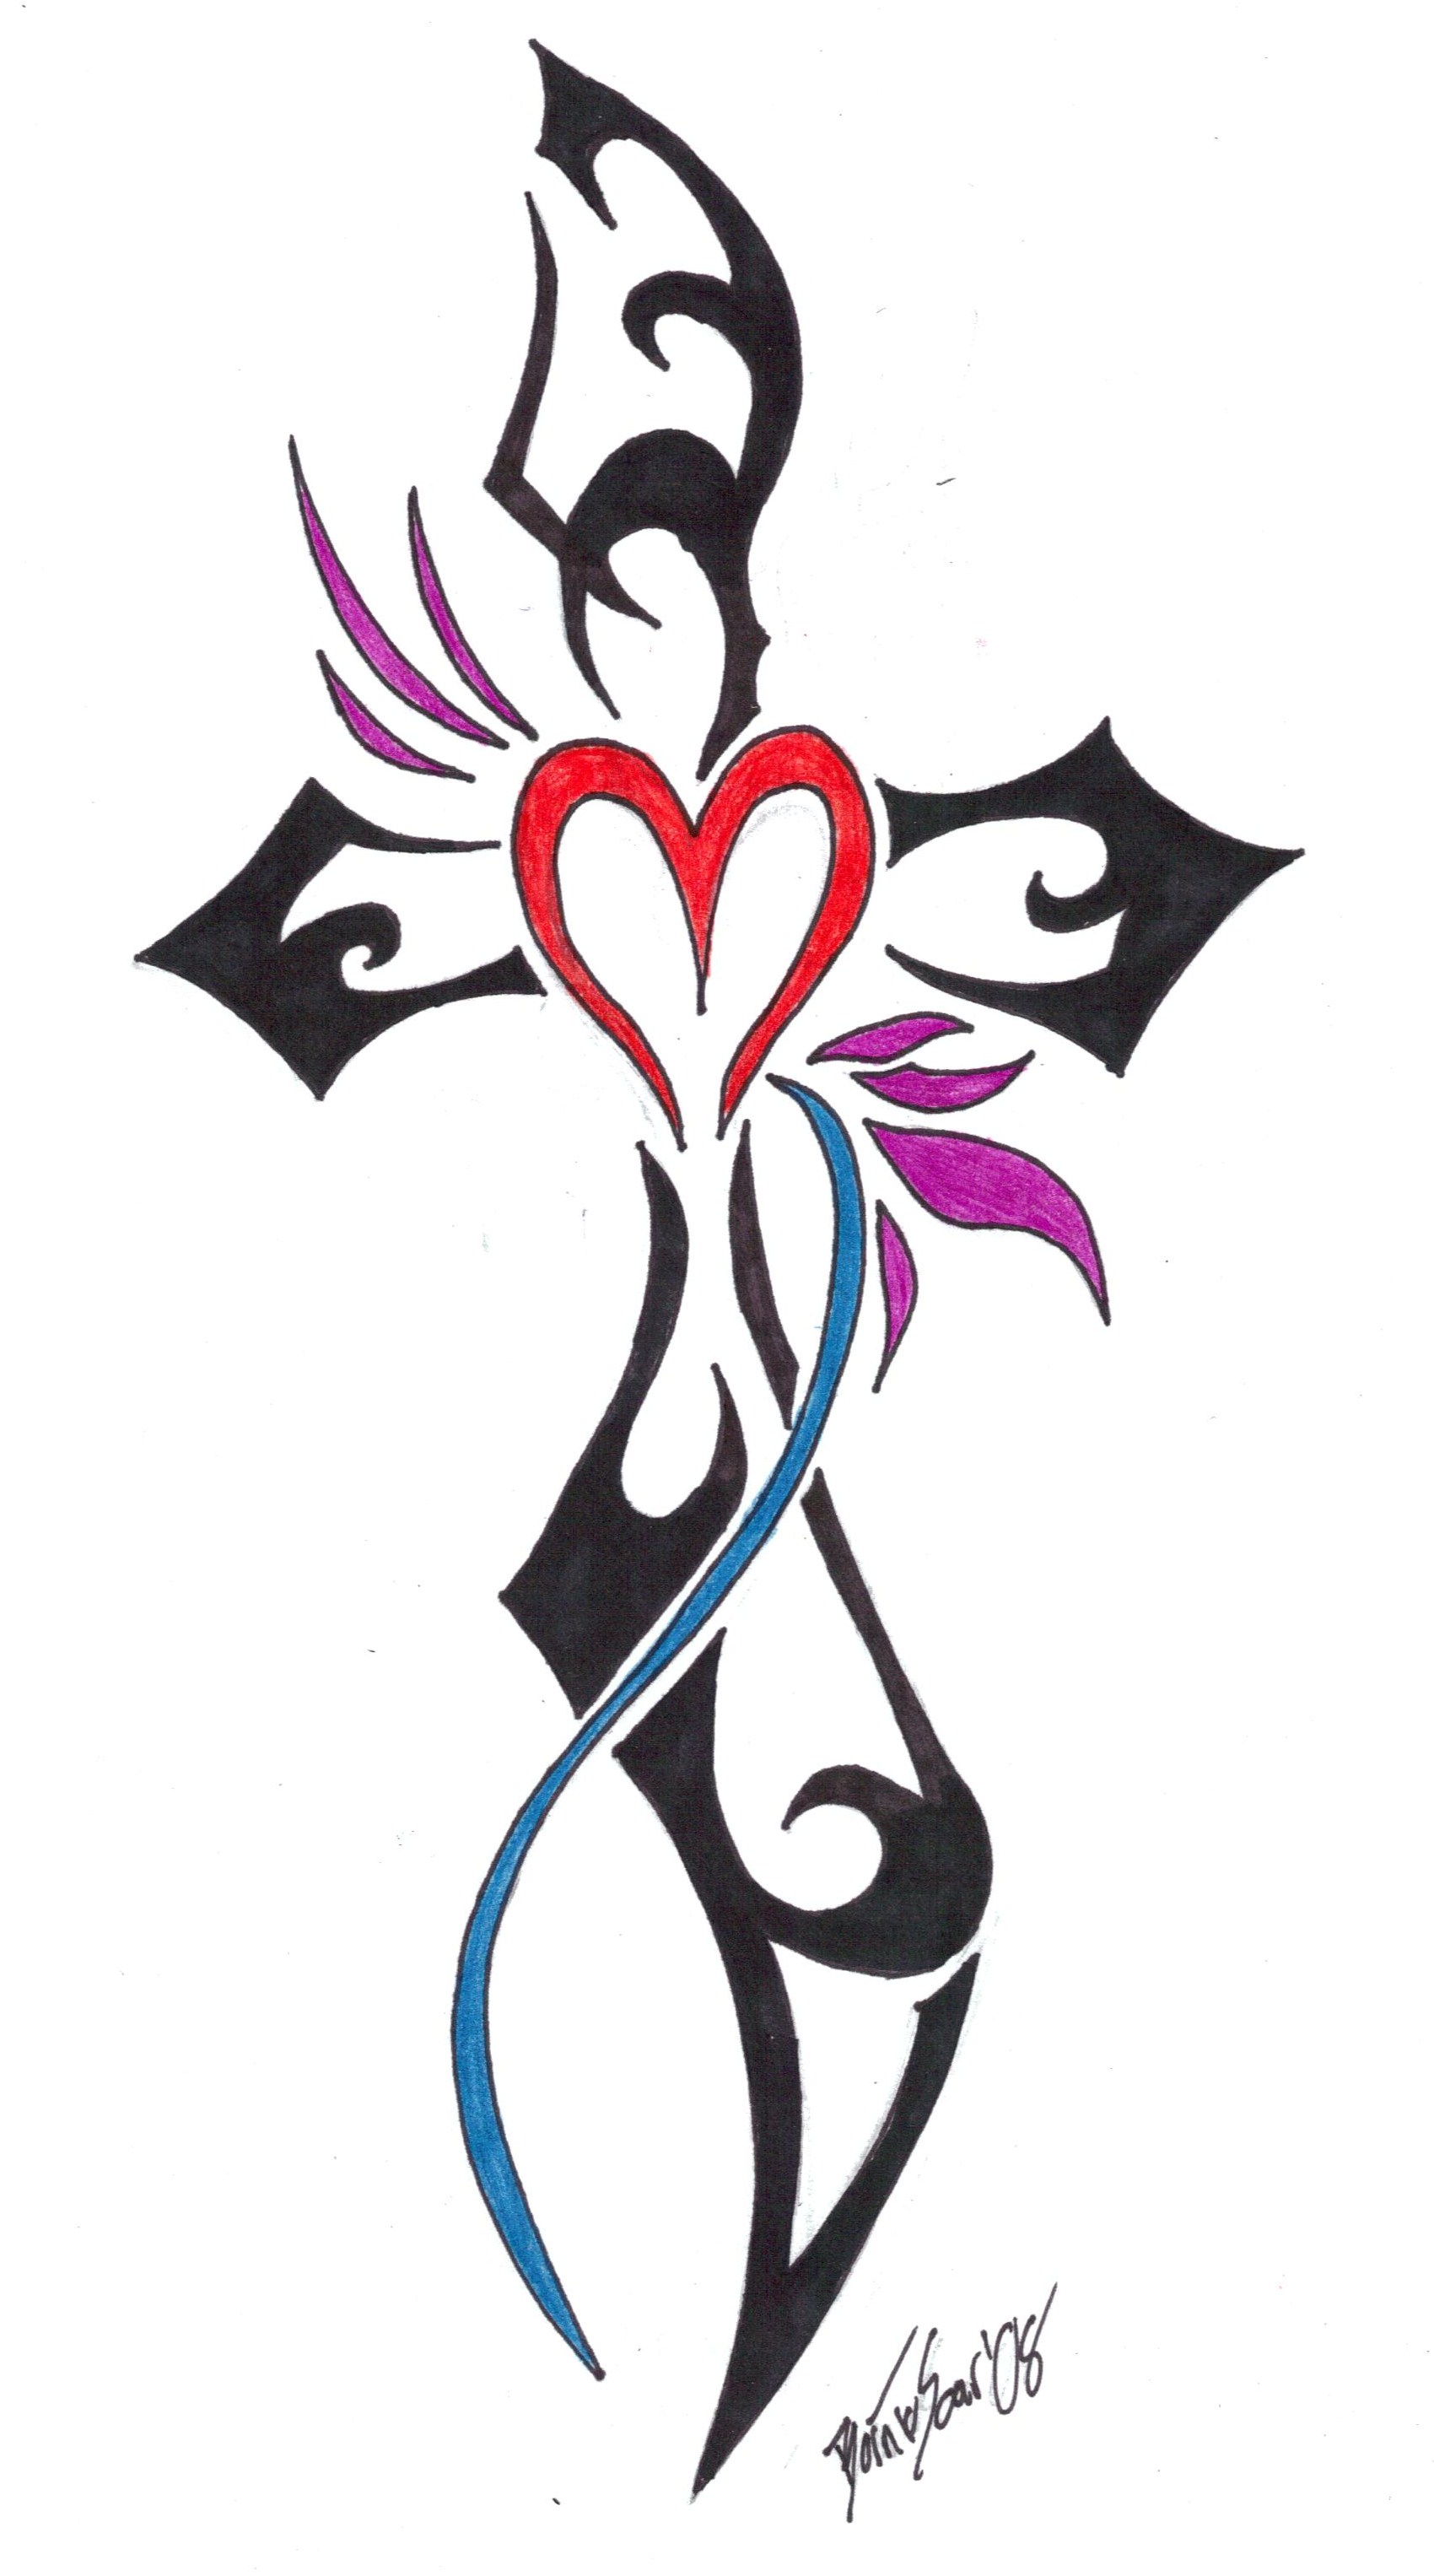 Christian Cross Tattoos Designs